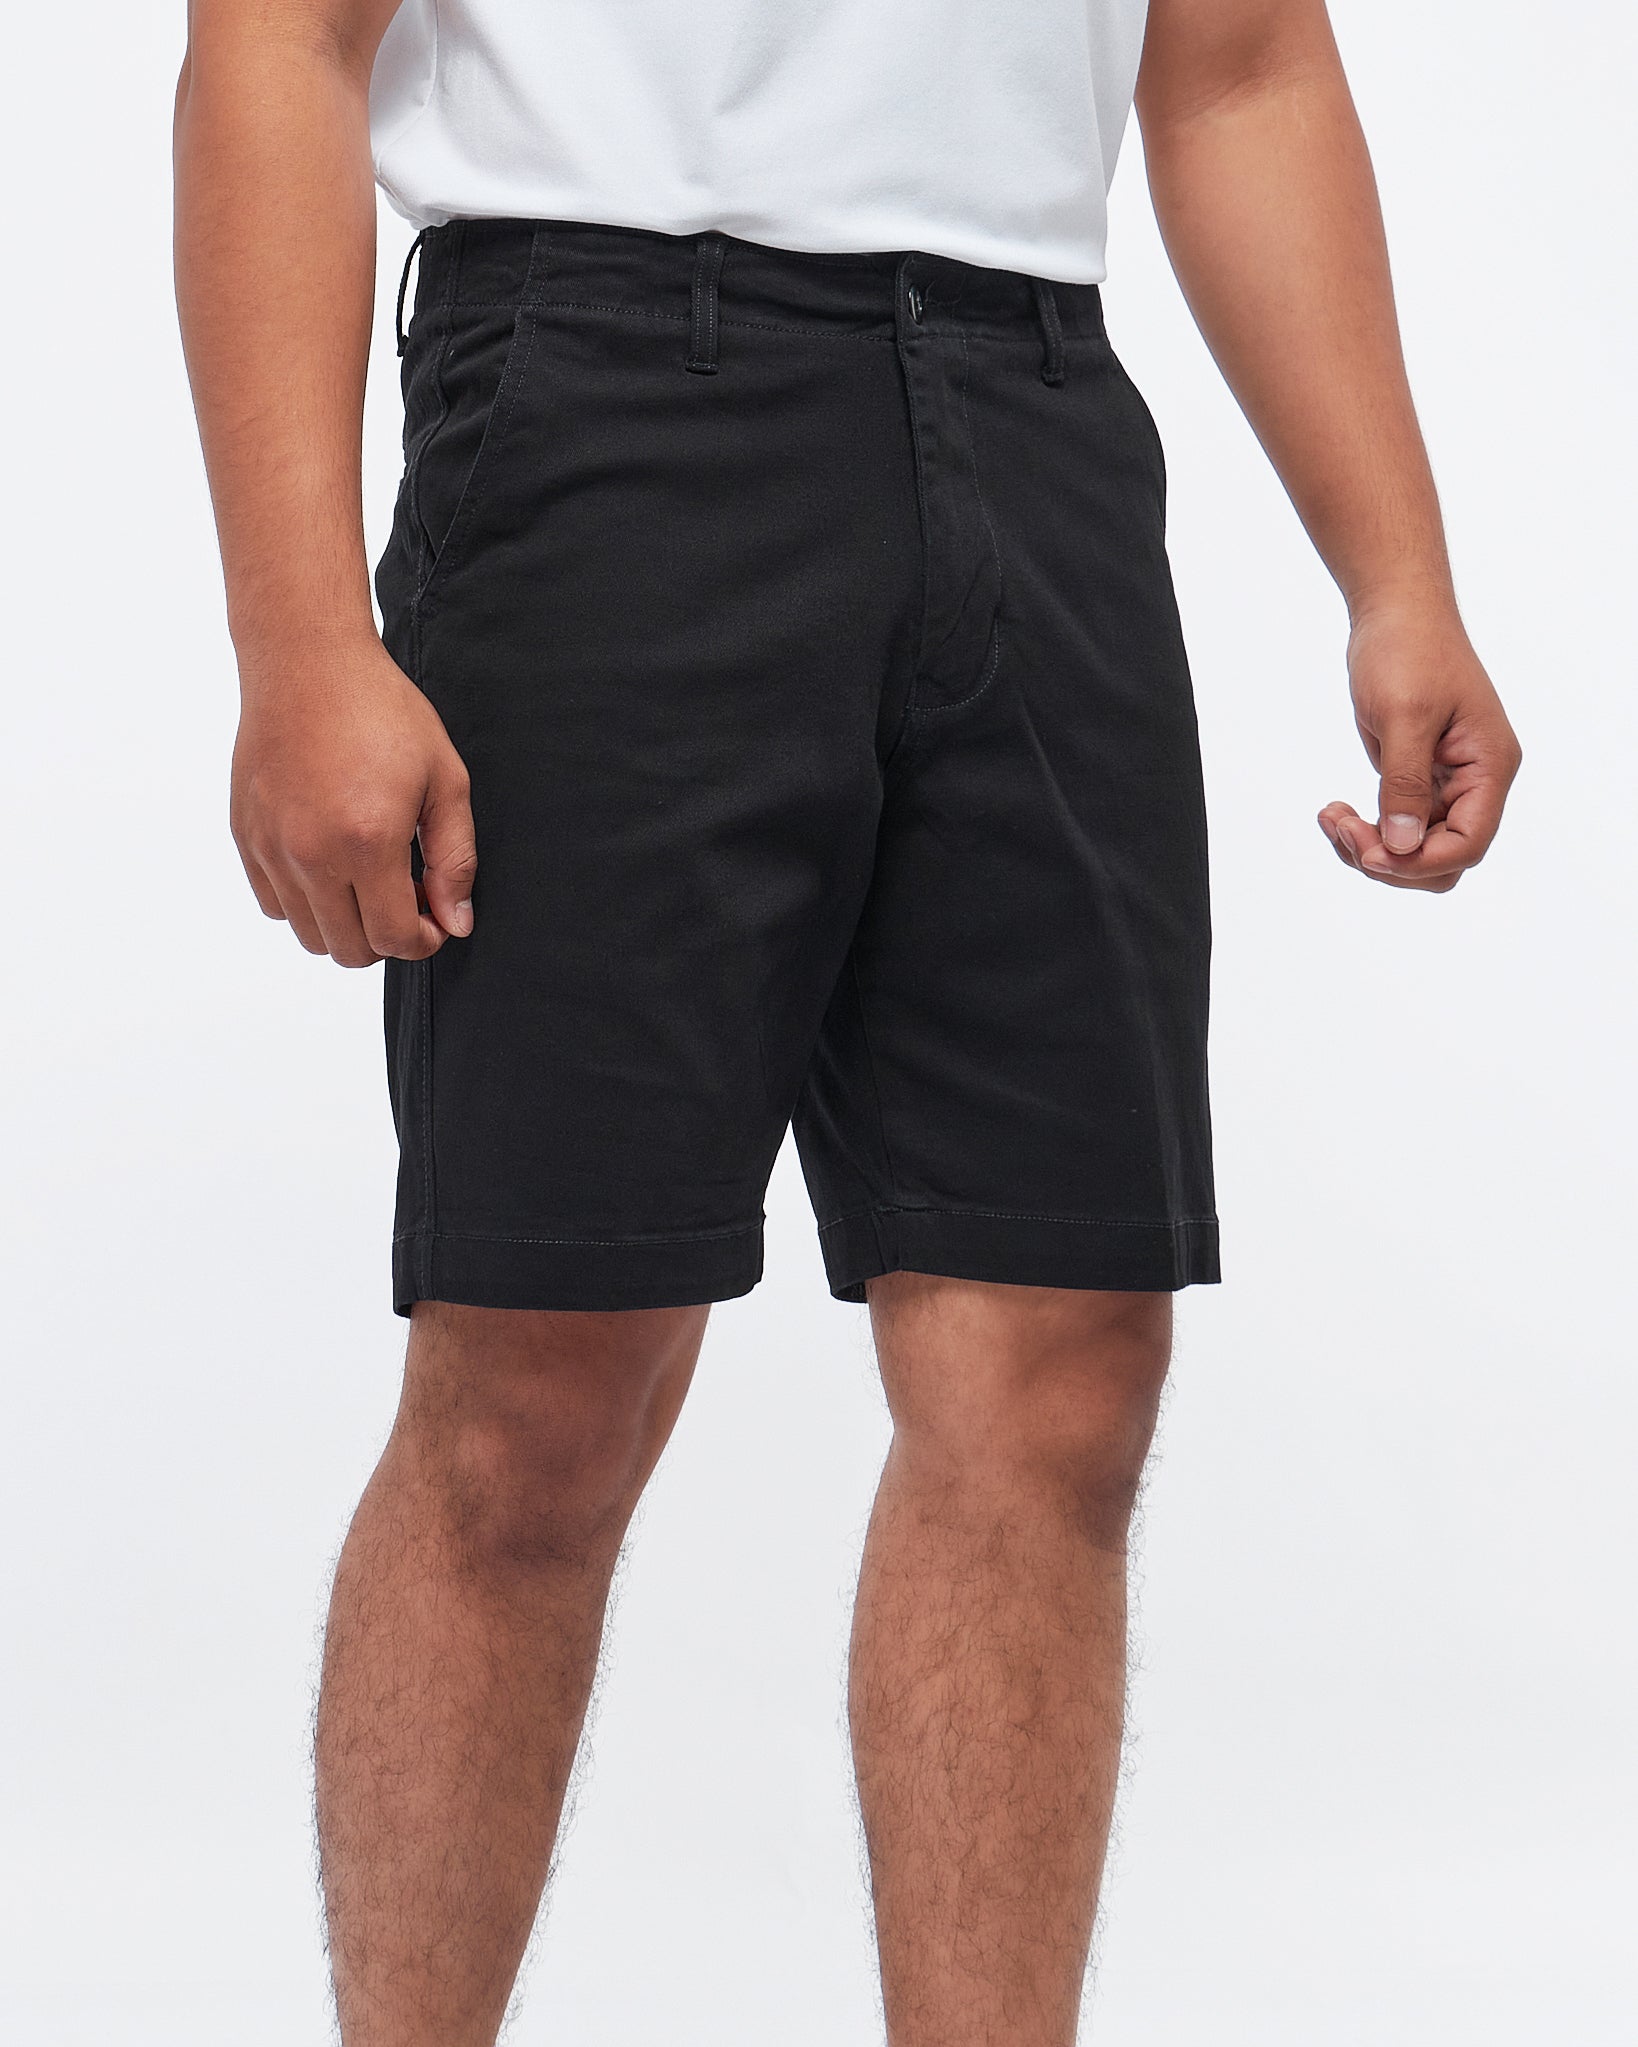 MOI OUTFIT-Casual Fit Khaki Men Shorts 17.50